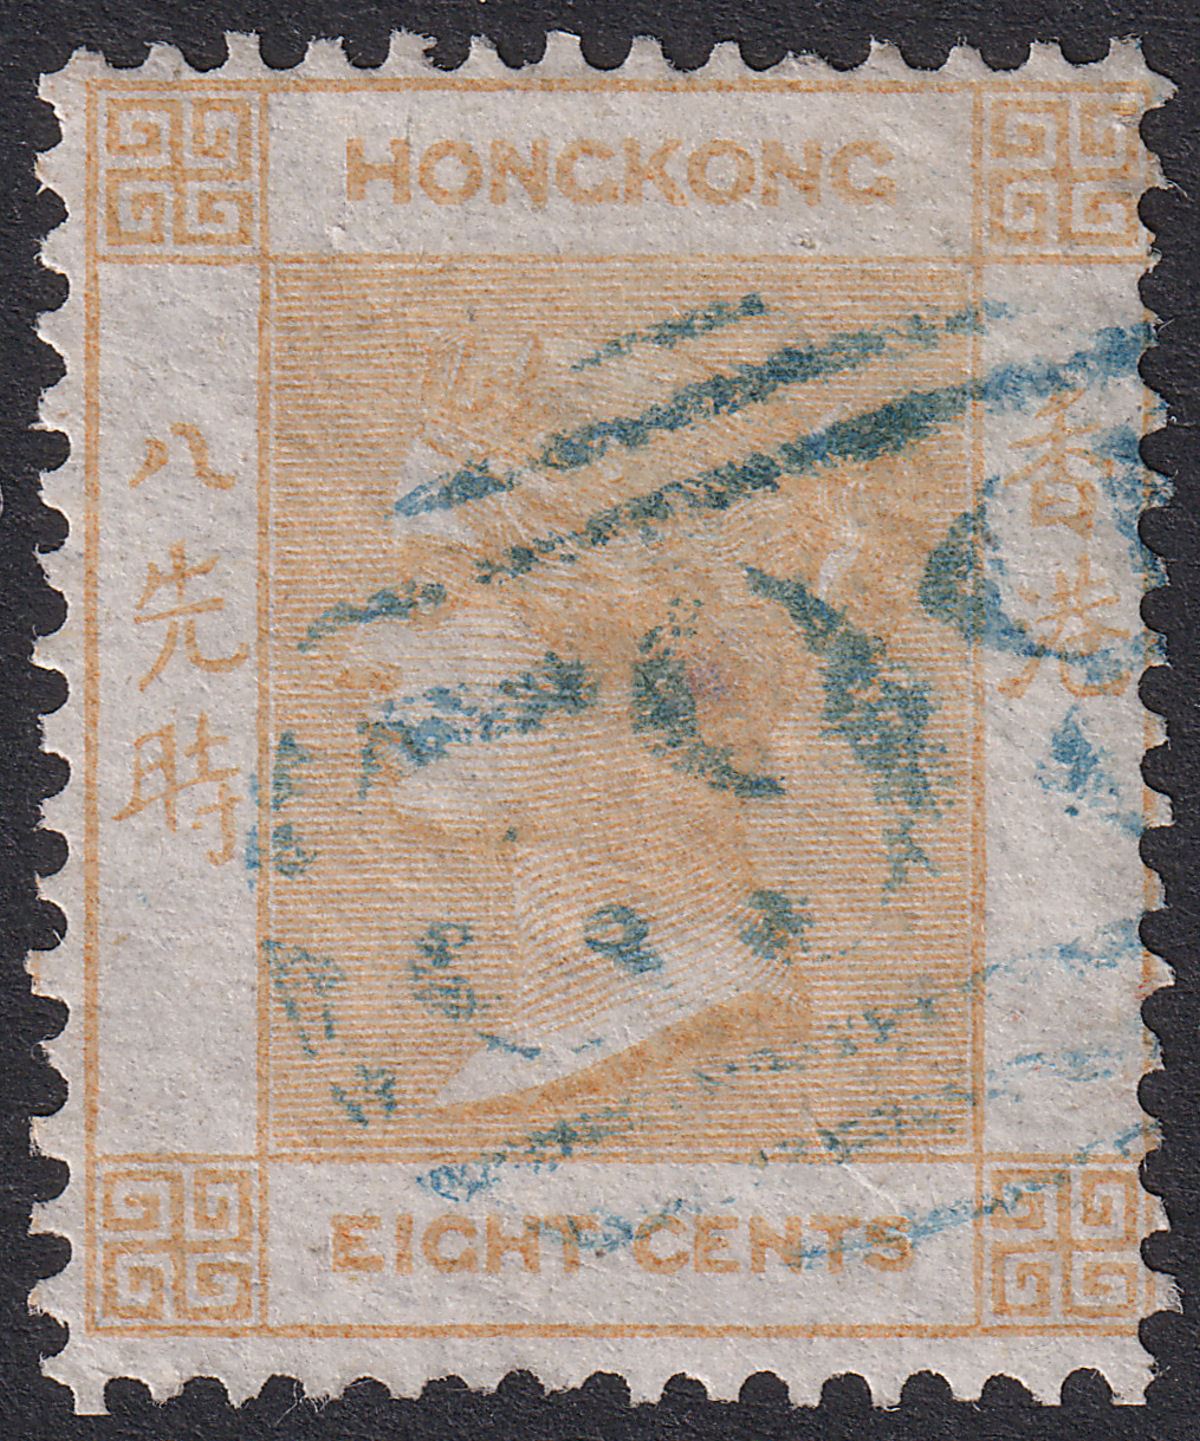 Hong Kong 1862 QV 8c Yellow-Buff Used SG2 cat £90 with Blue B62 Postmark